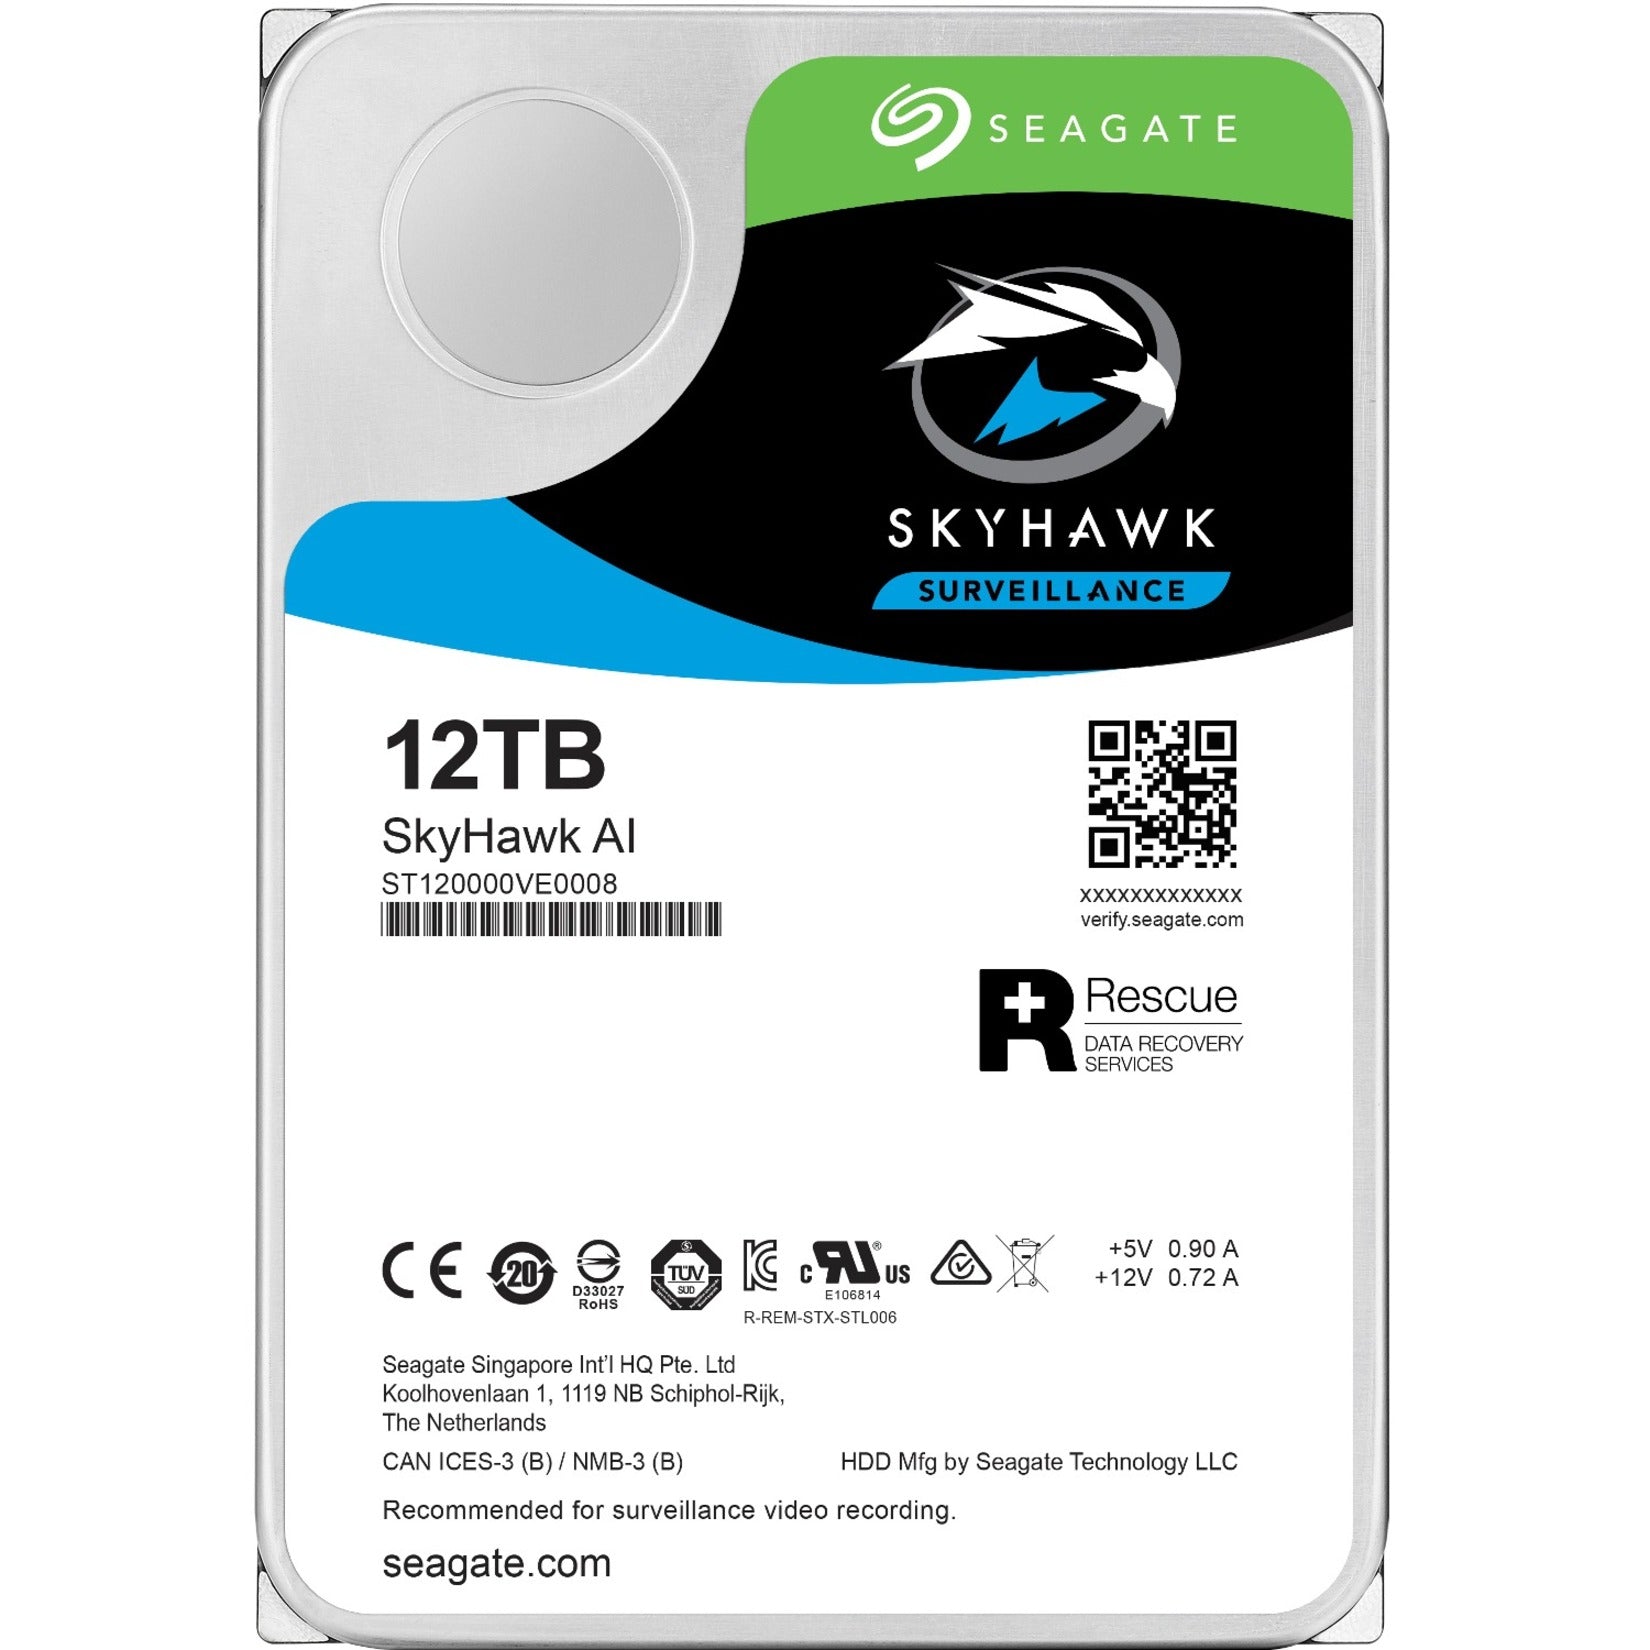 Seagate ST12000VE001 SkyHawk AI 12TB Hard Drive, 24x7 Surveillance Storage